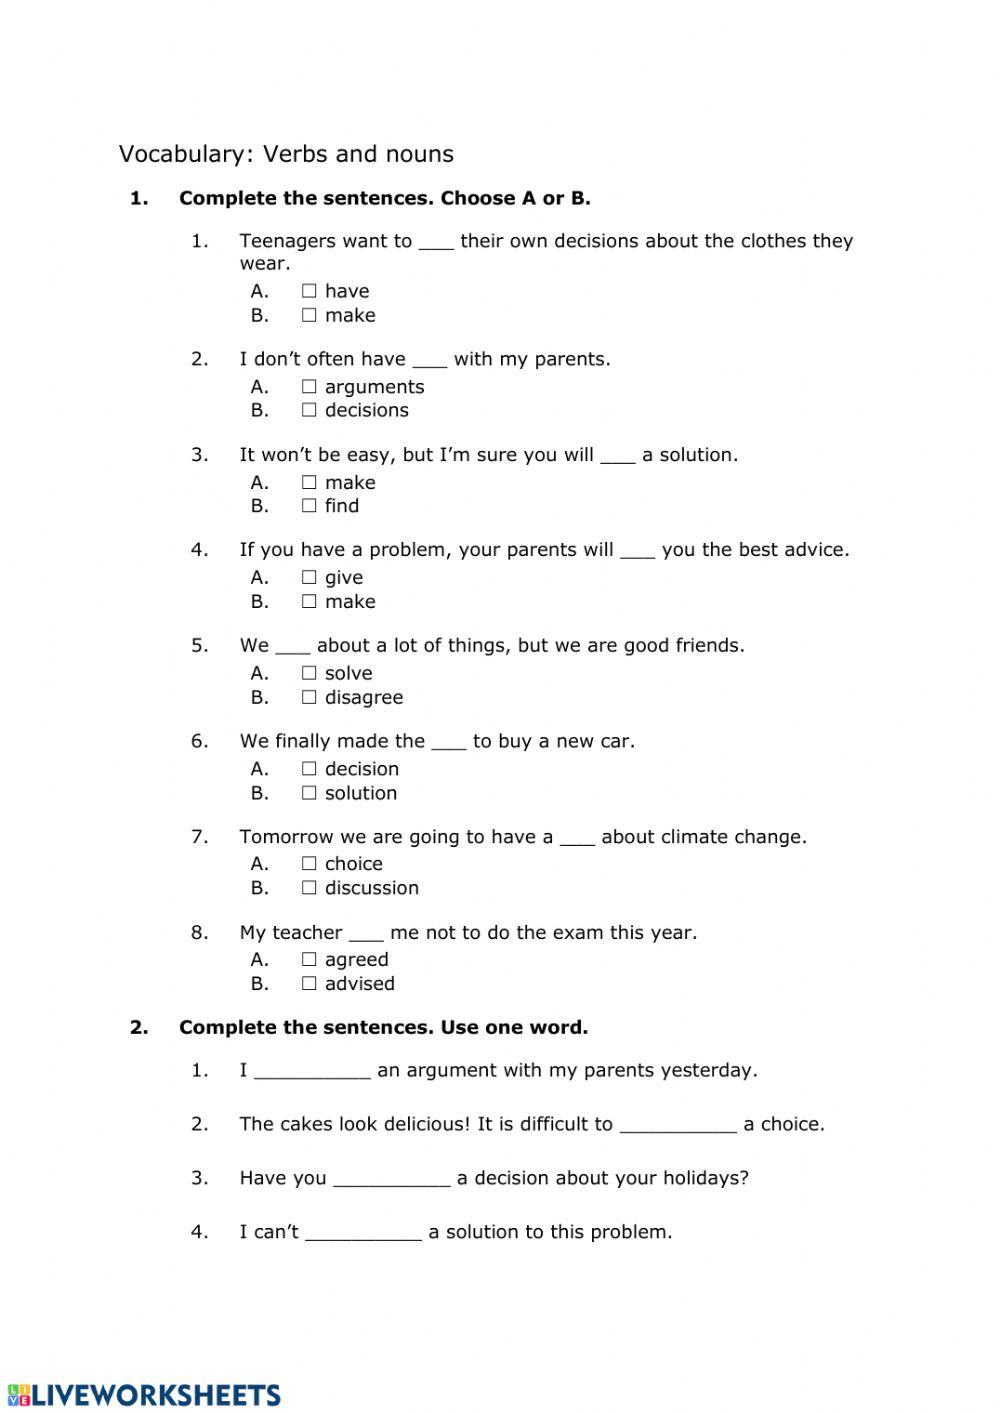 Nouns and Verbs Worksheet Vocabulary Nouns and Verbs Interactive Worksheet